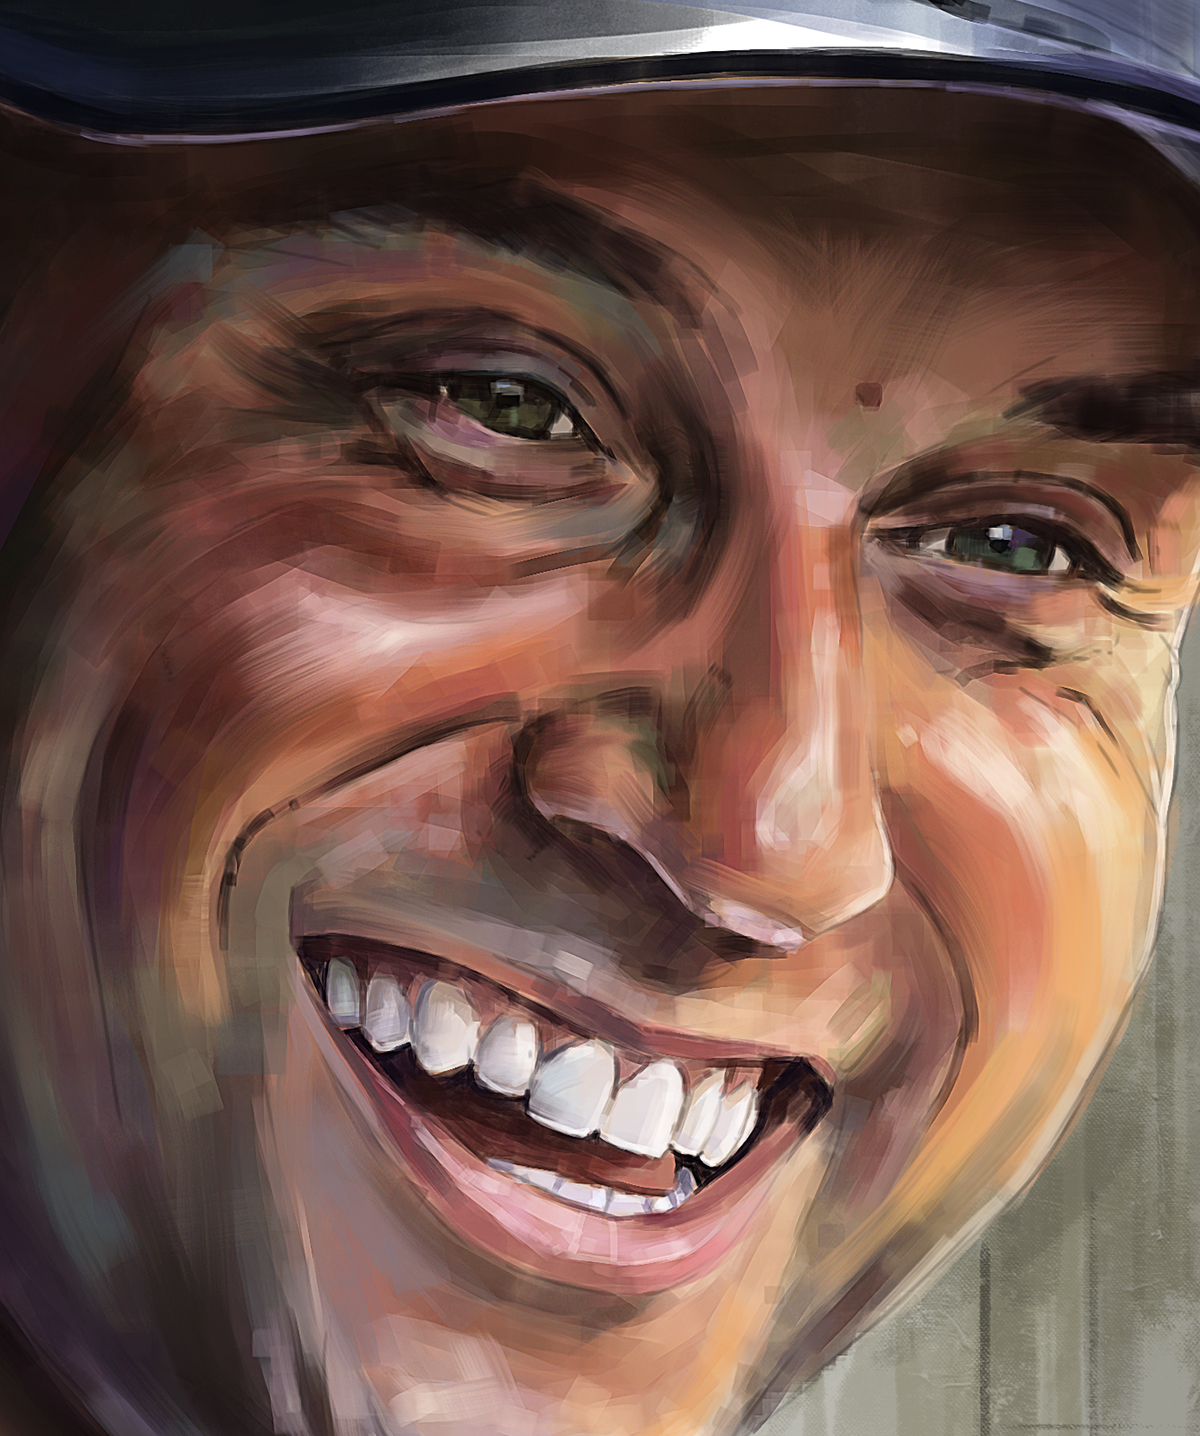 sports art digital painting New York baseball Derek Jeter yankees tribute